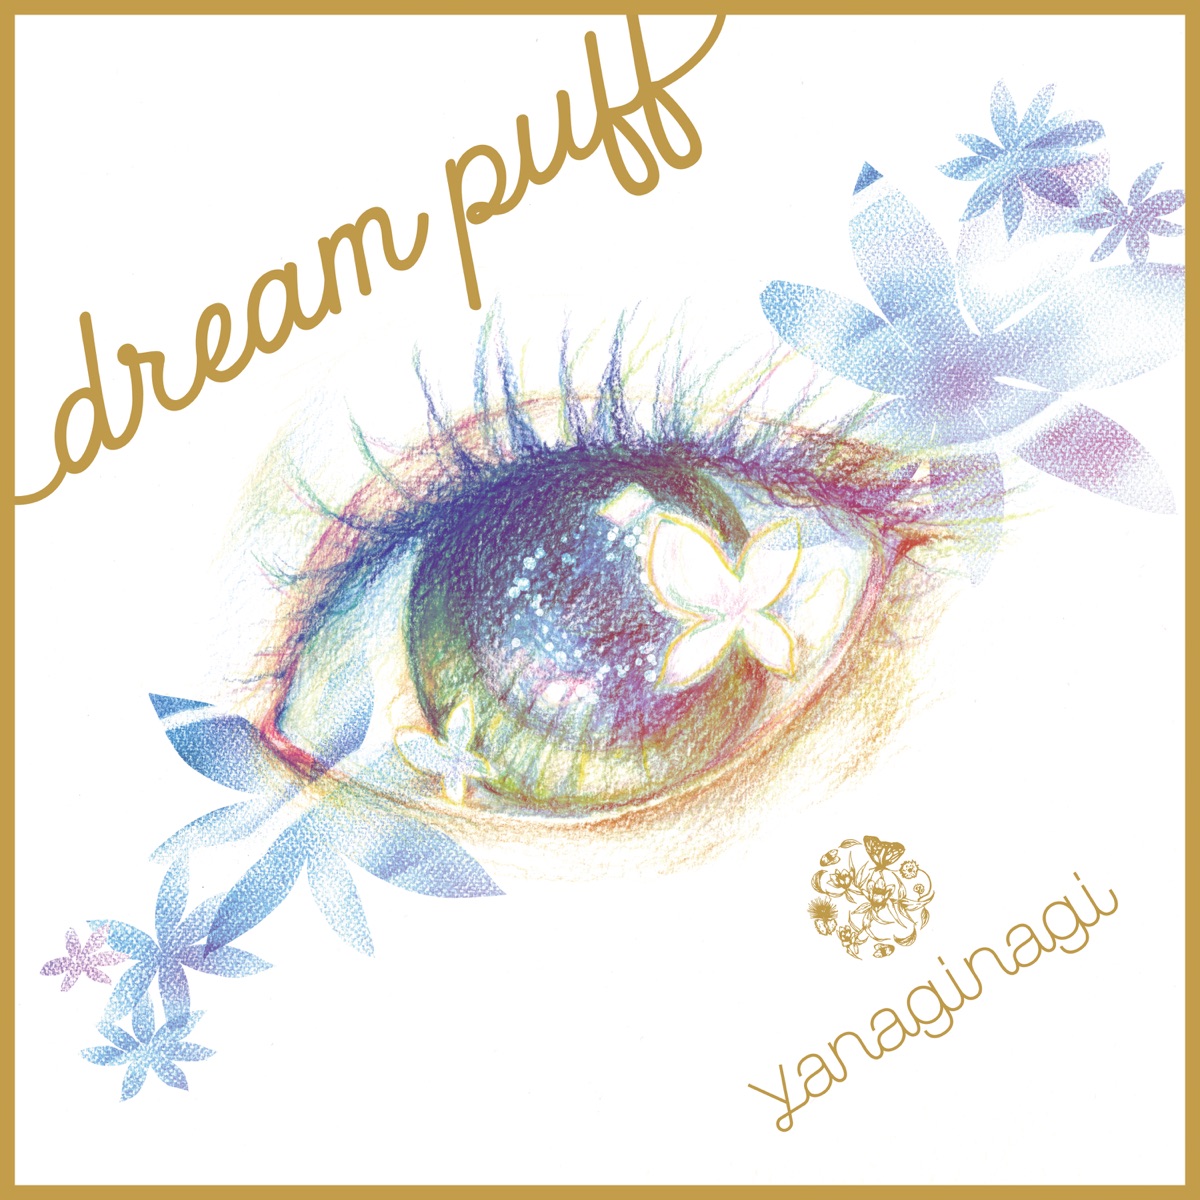 Cover art for『yanaginagi - dream puff』from the release『dream puff』